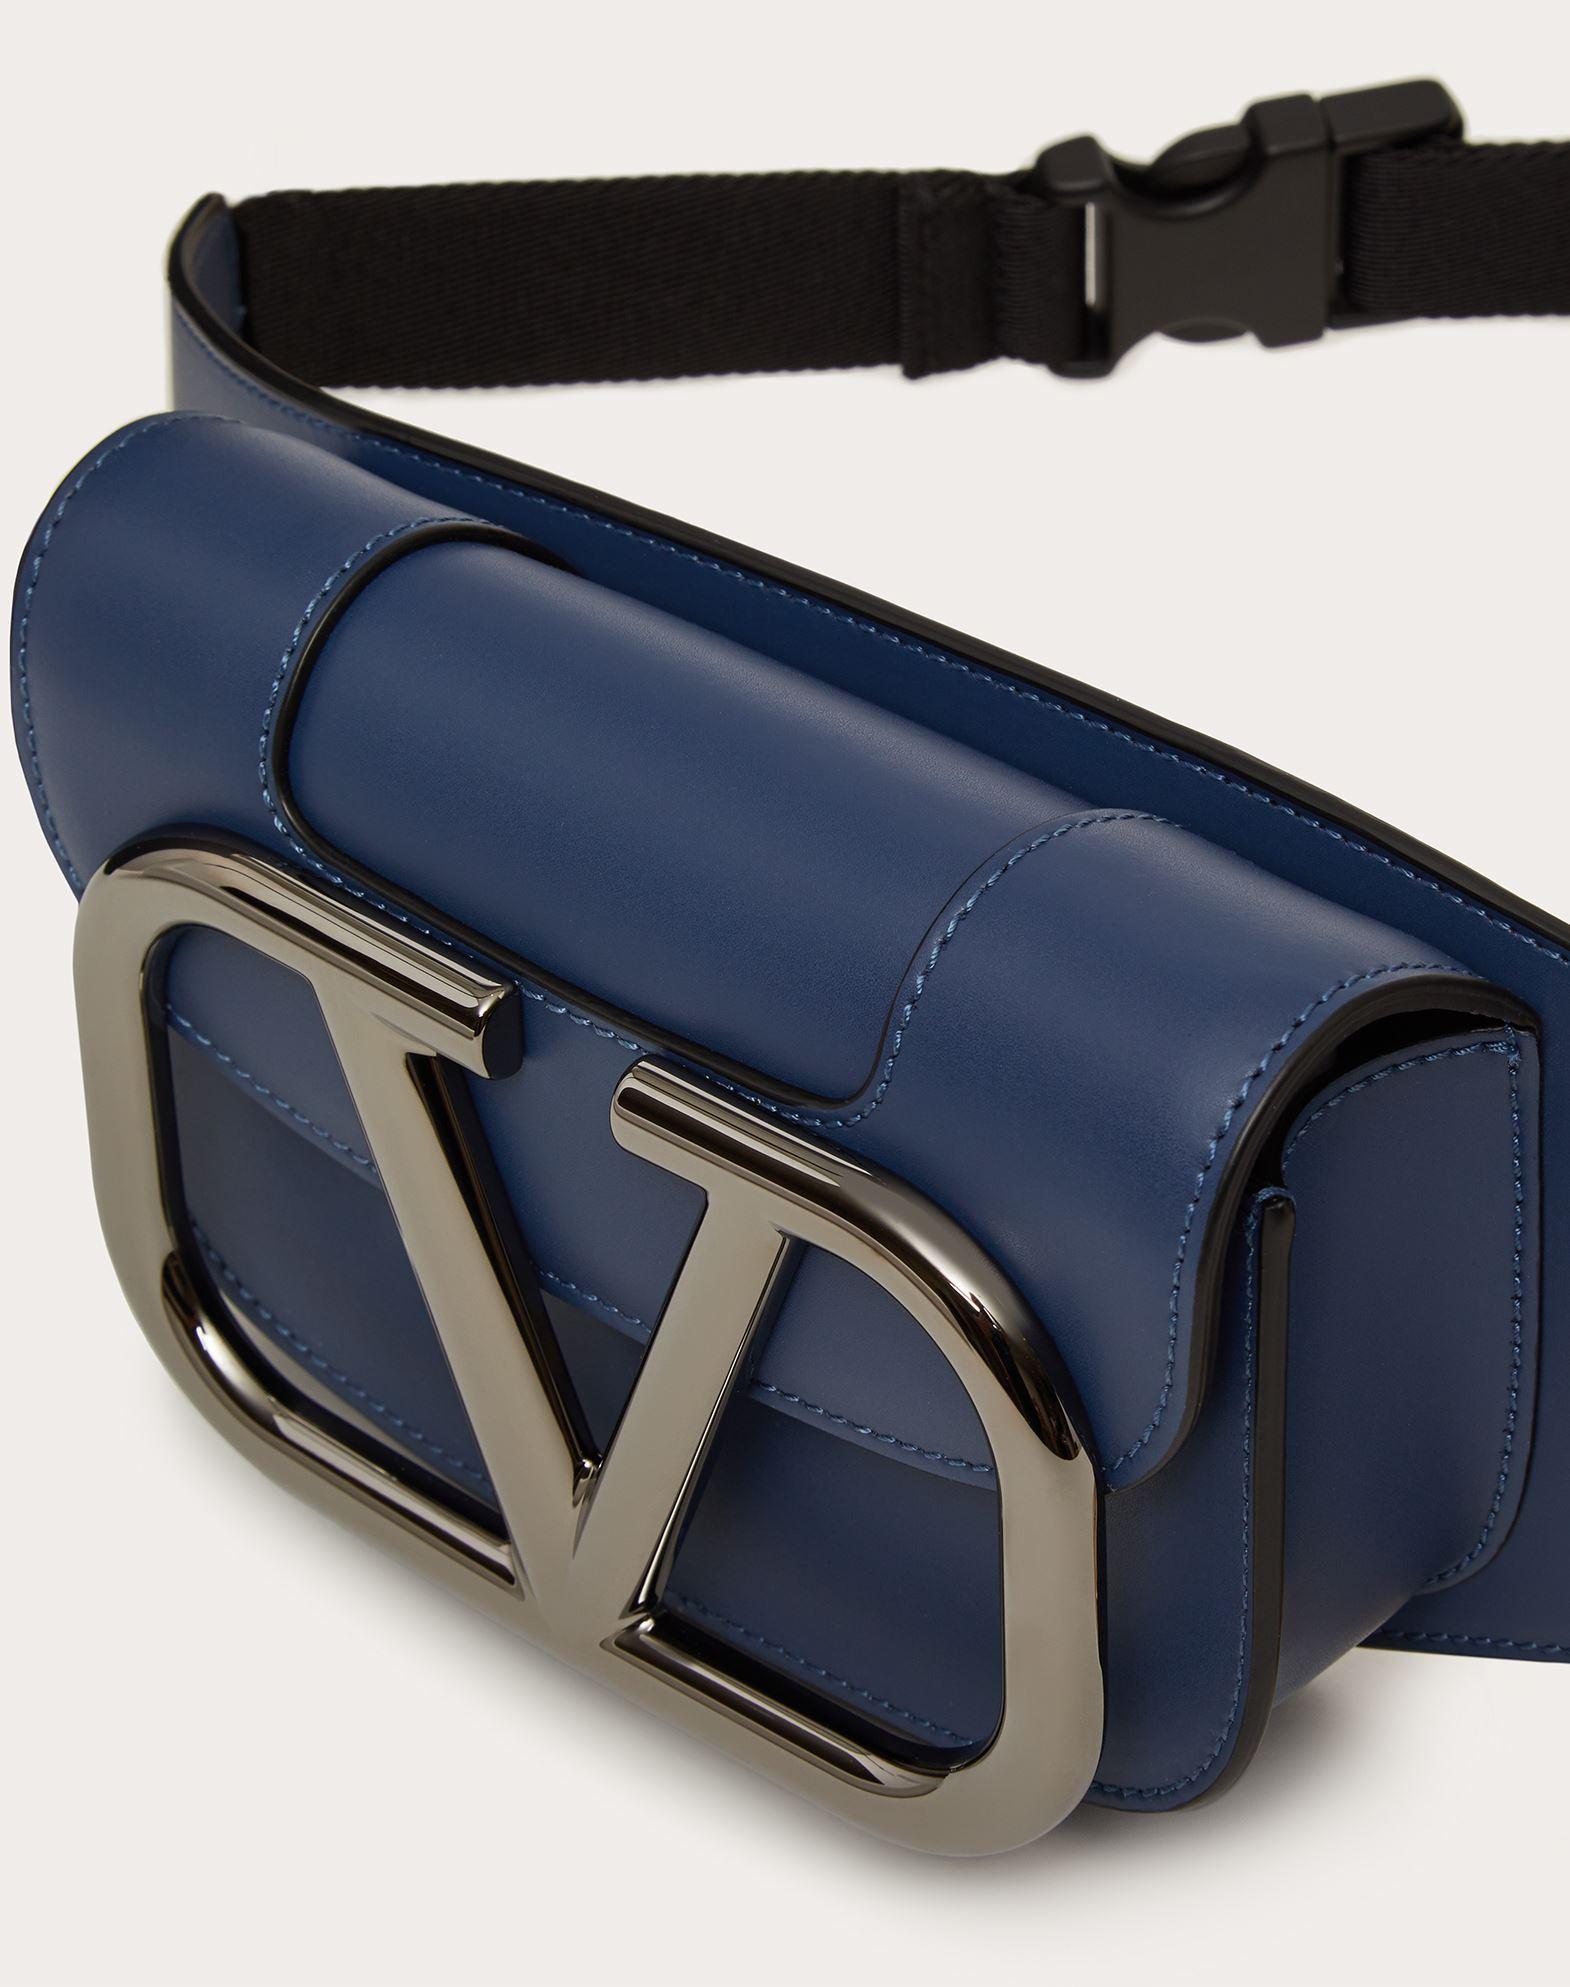 Supervee patent leather handbag Valentino Garavani Black in Patent